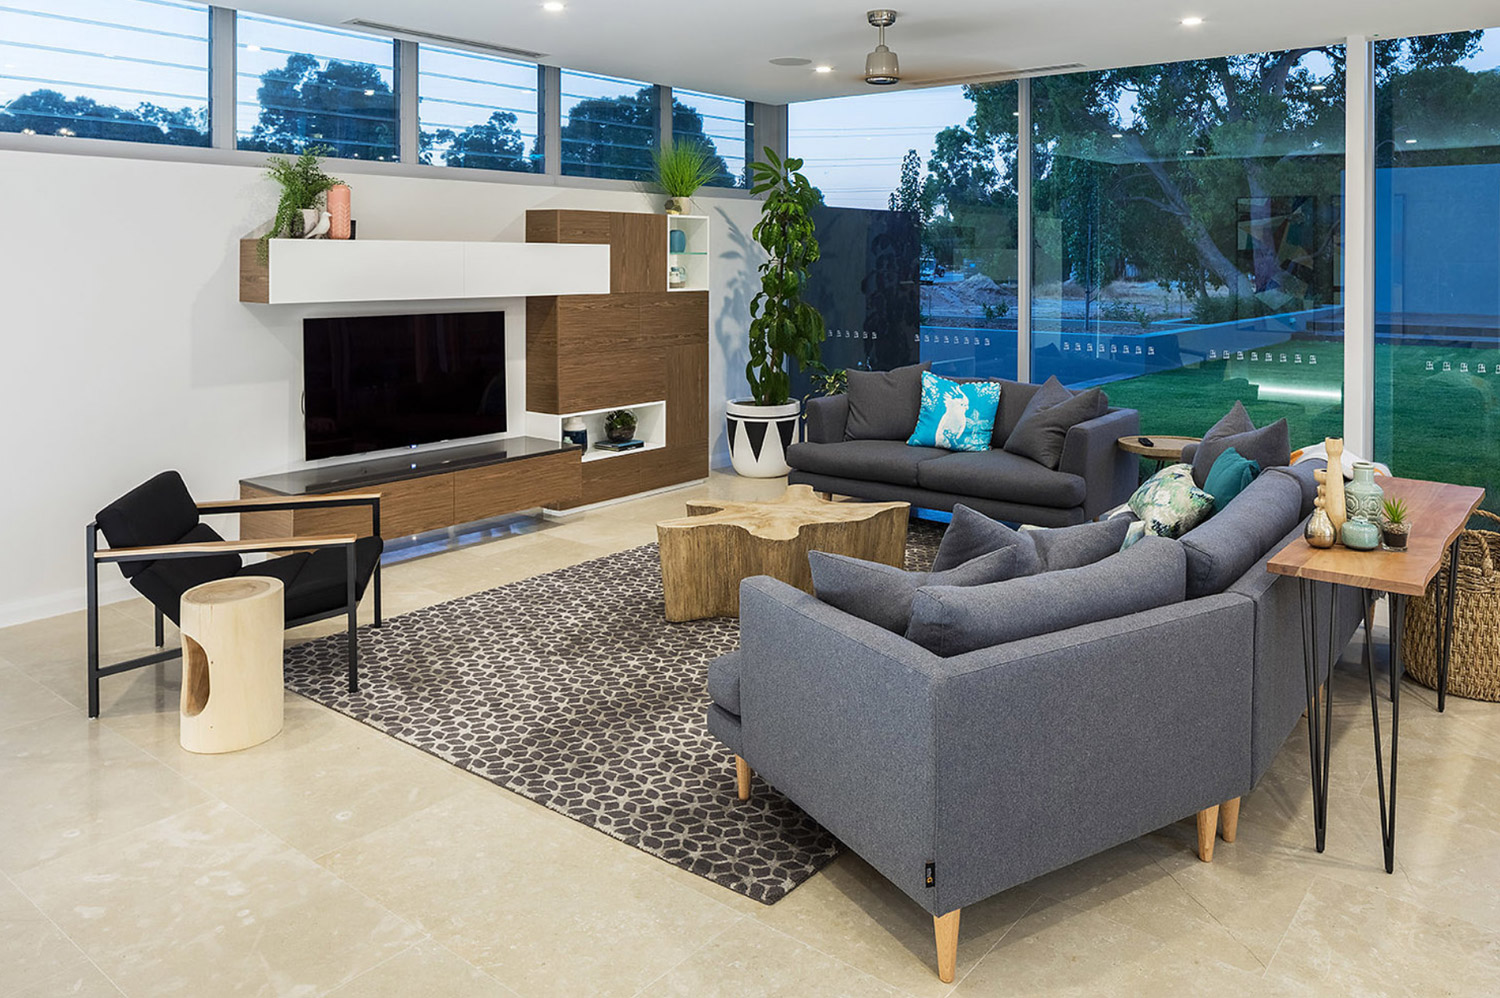 Champion Lakes living area designed by Studio Seventy Four